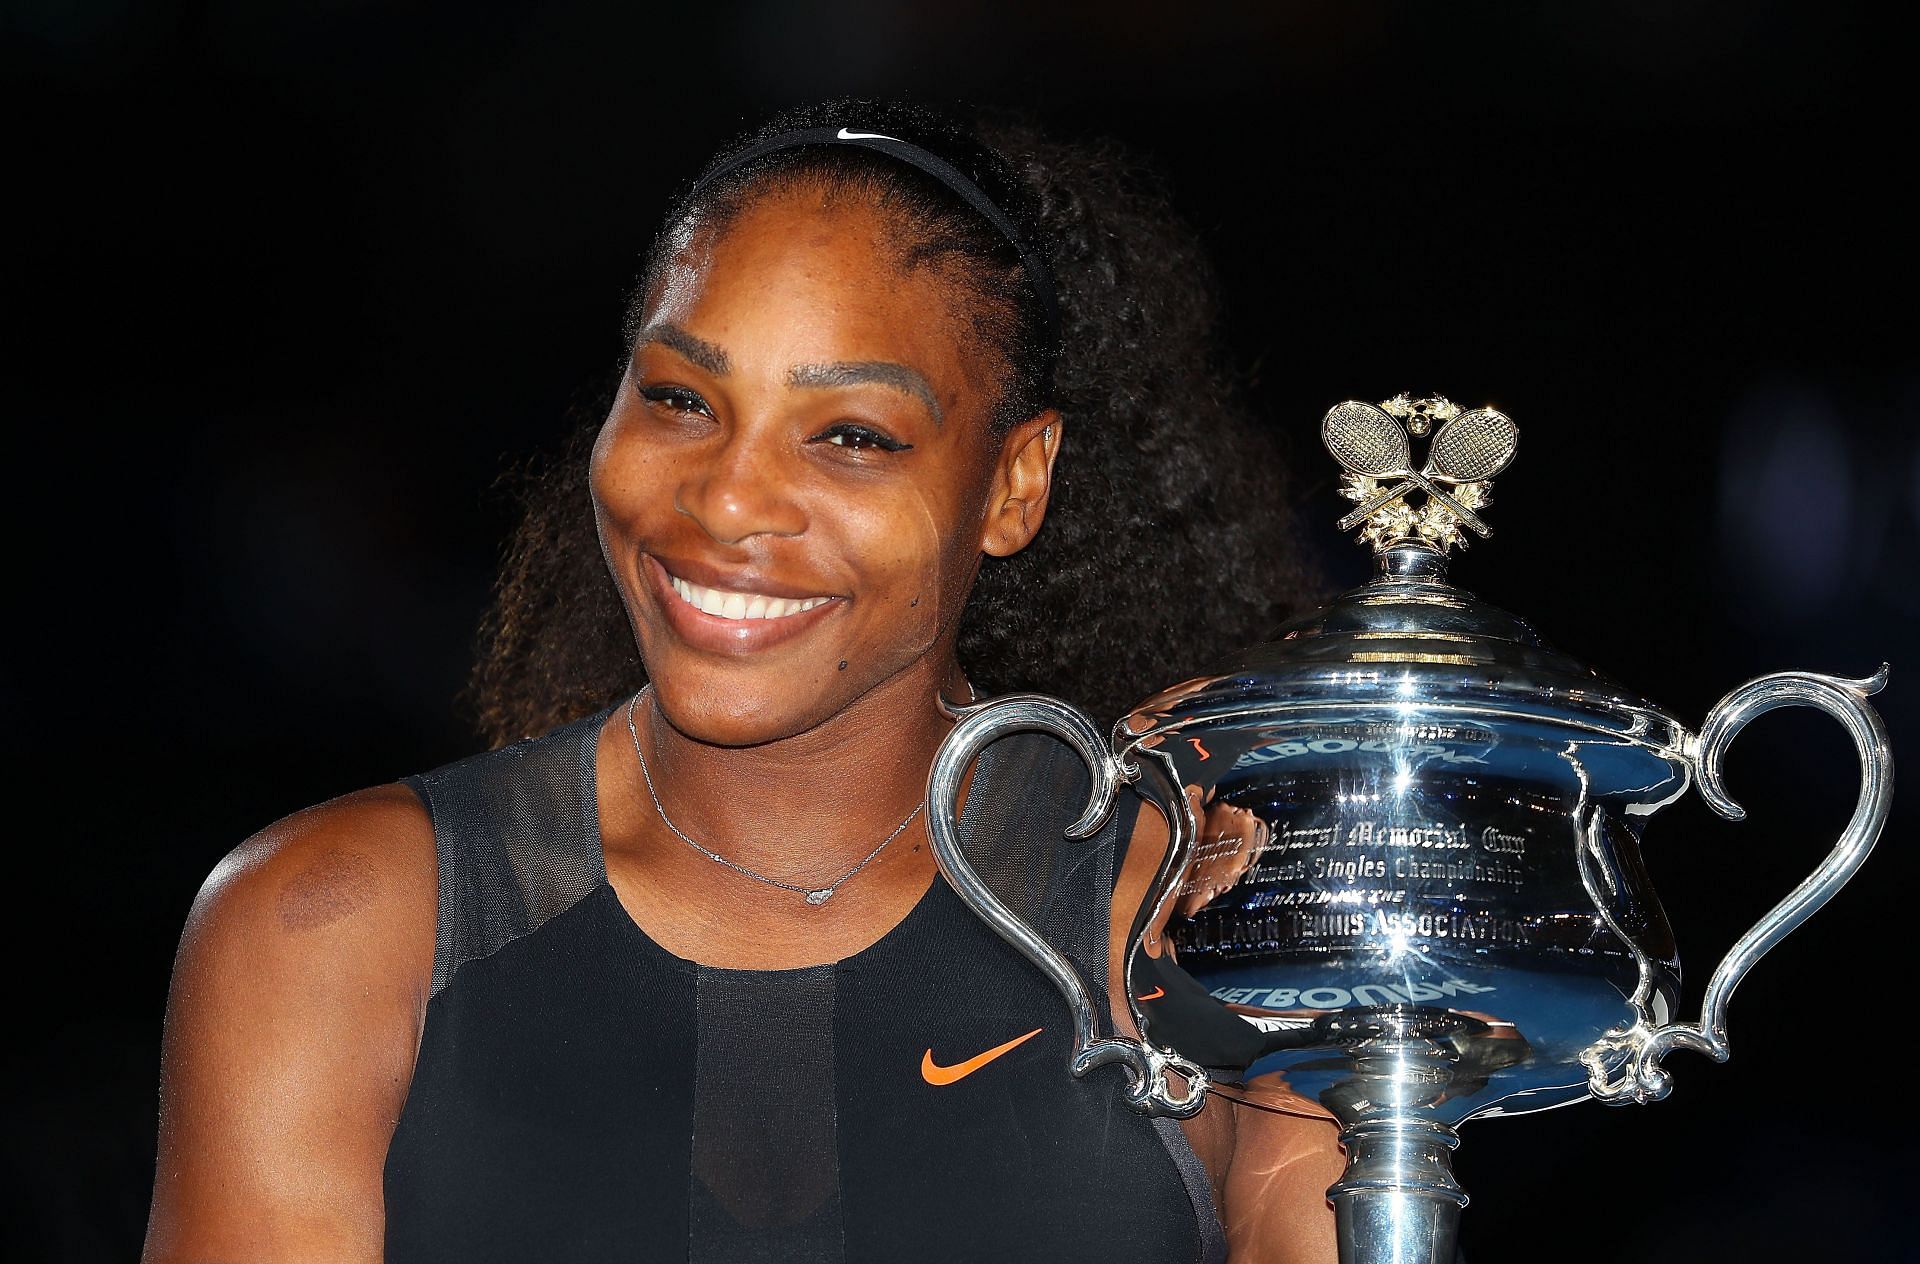 Serena Williams won her 23rd Grand Slam singles title at the 2017 Australian Open.